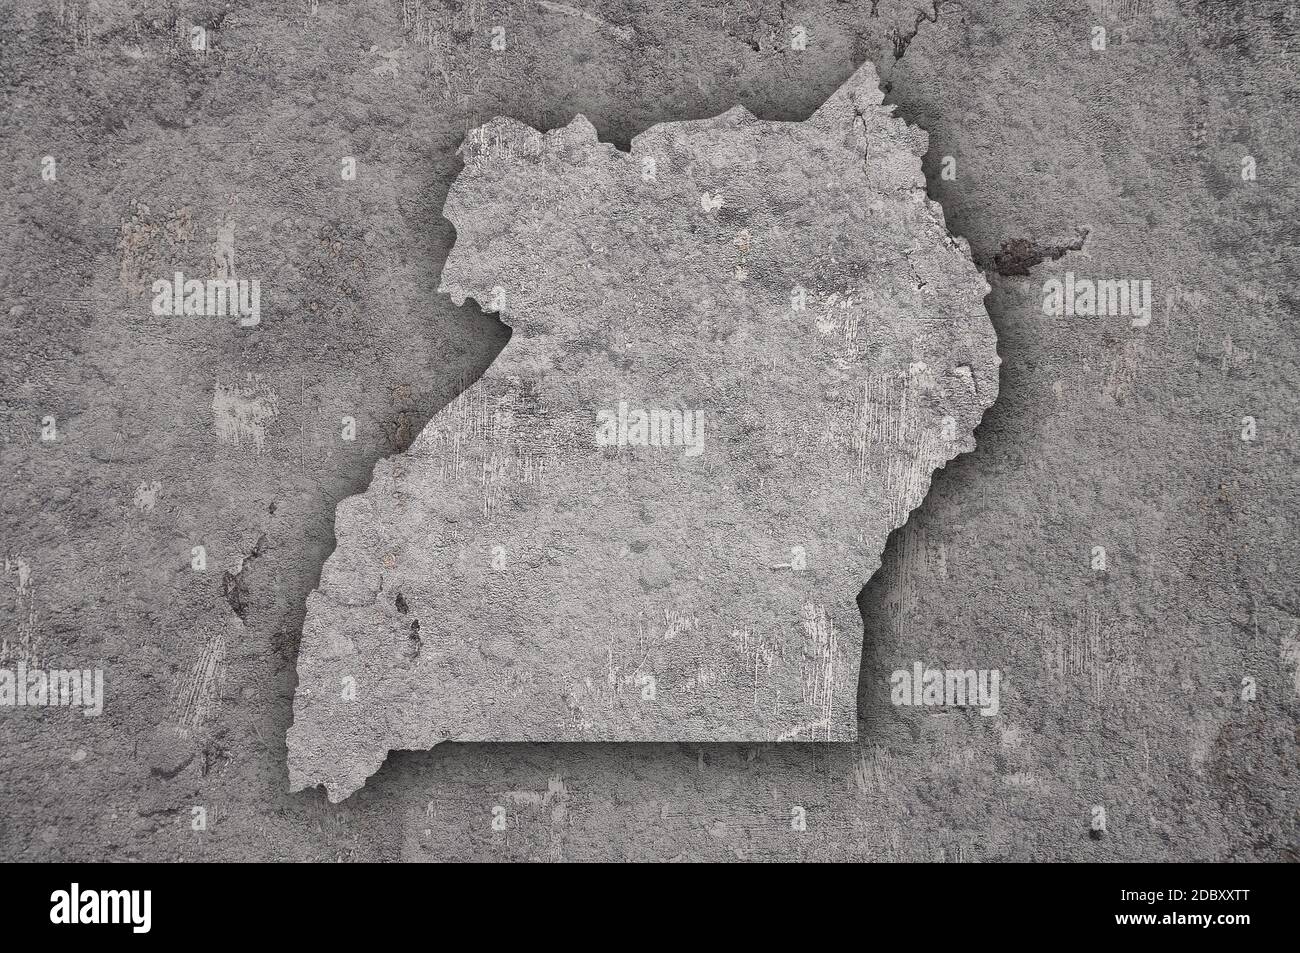 Map of Uganda on weathered concrete Stock Photo